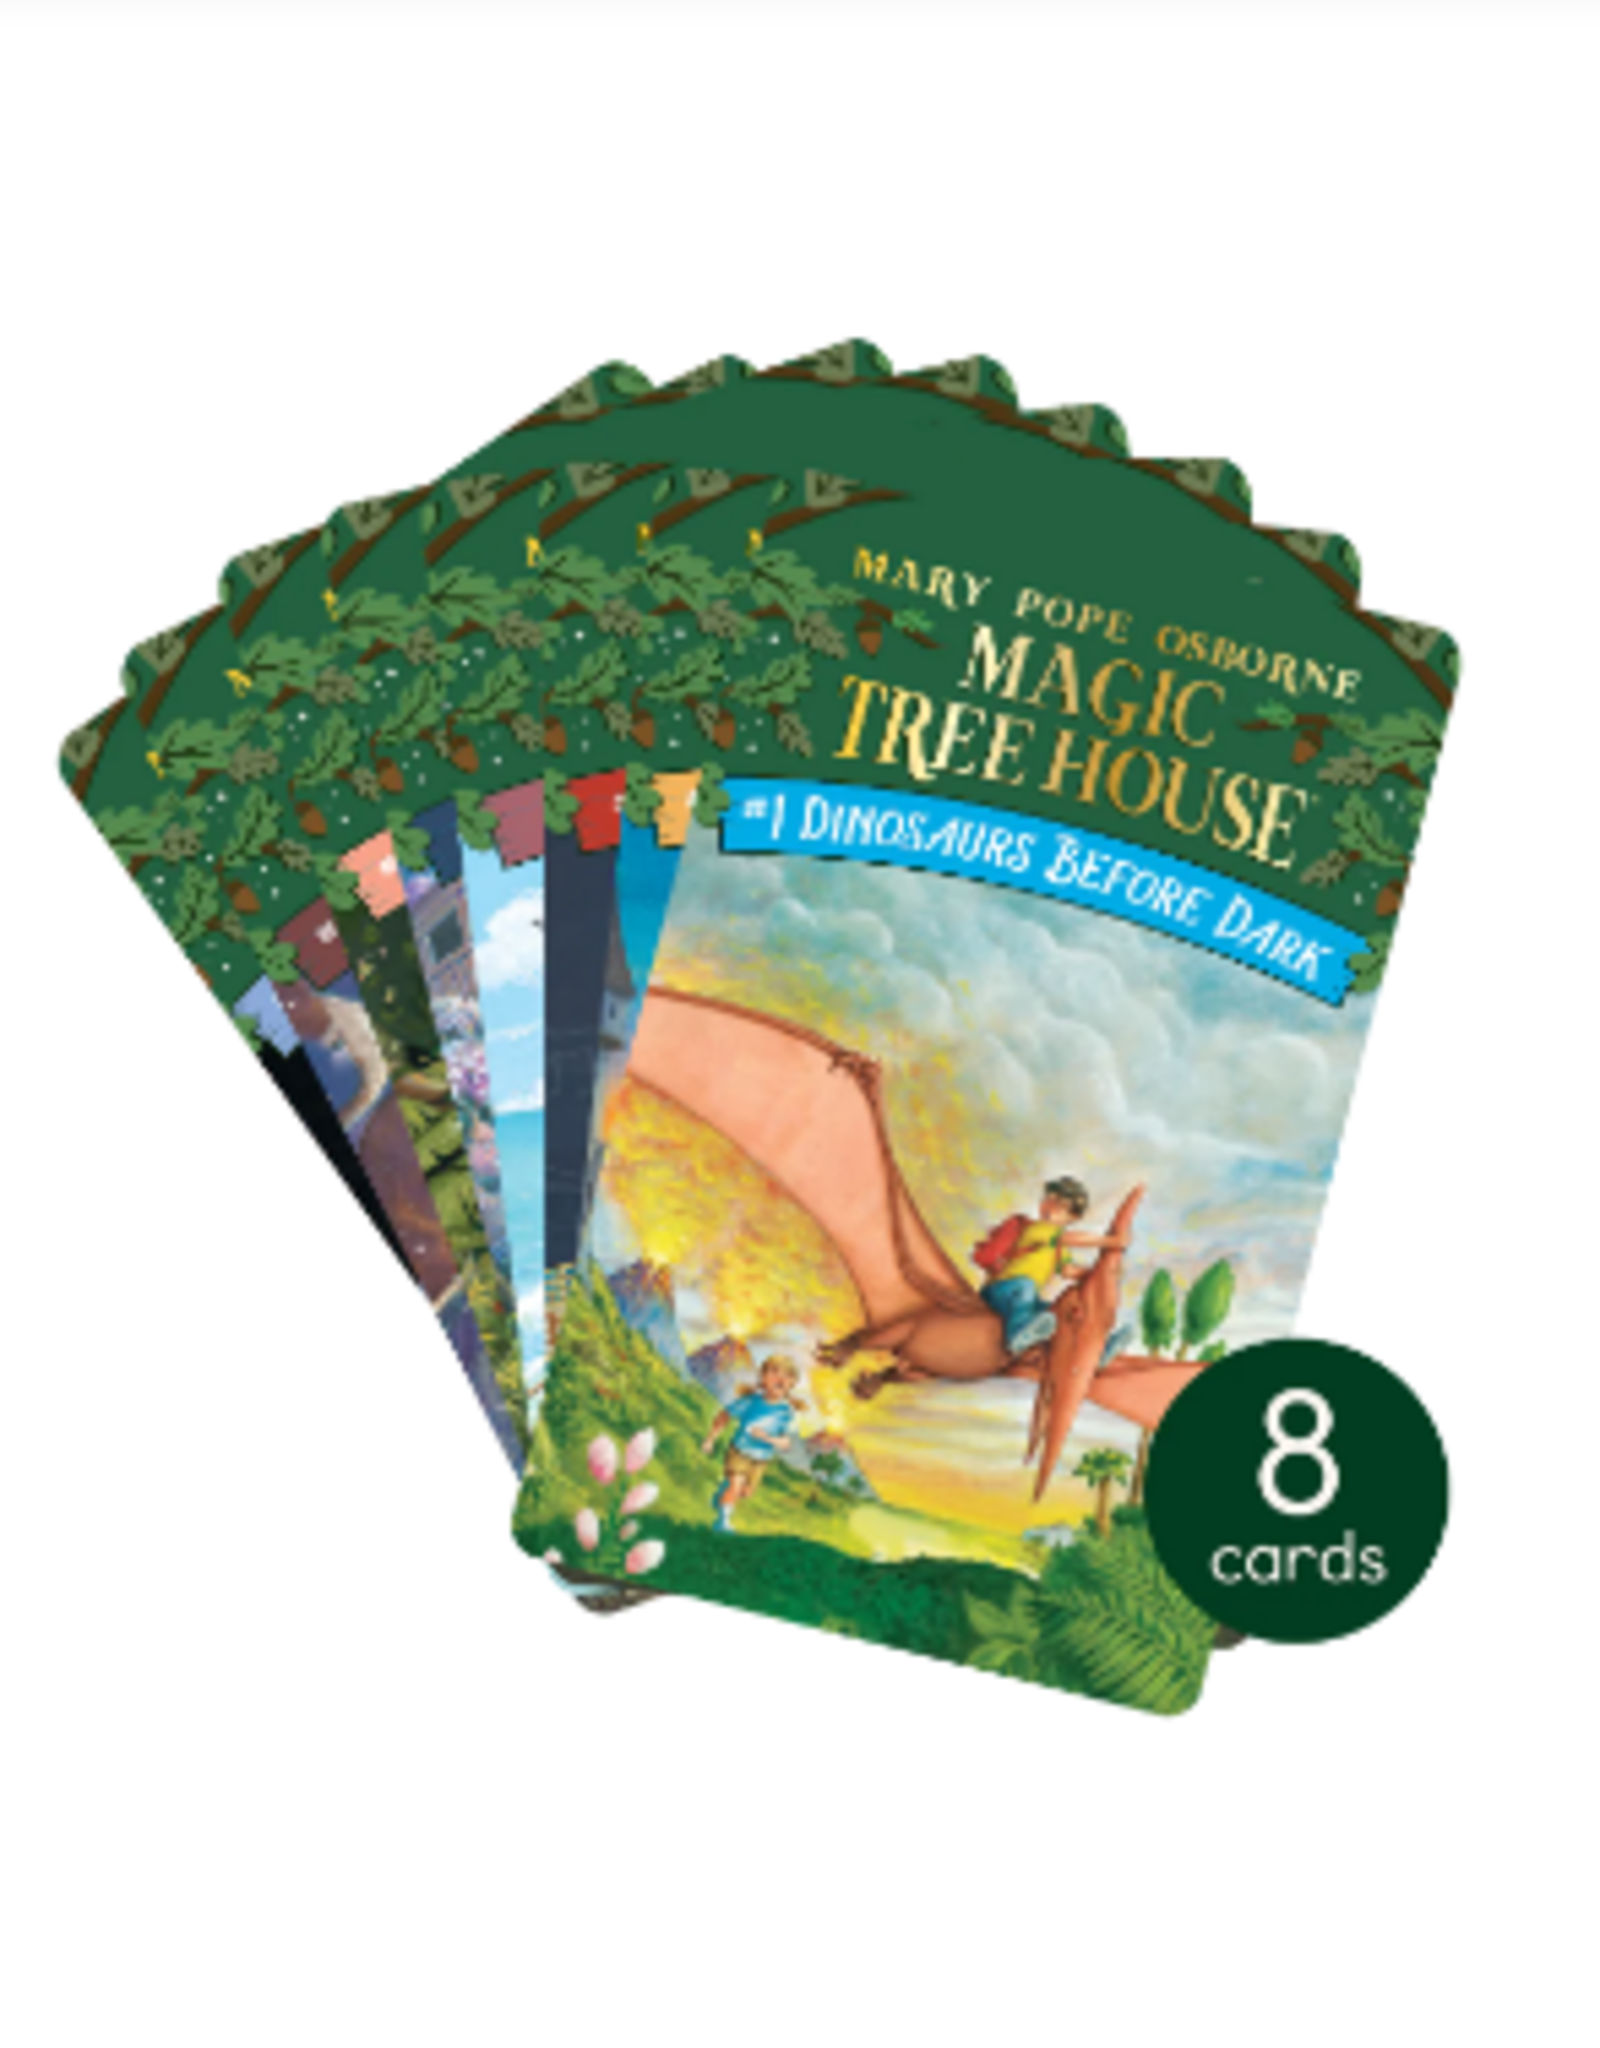 magic tree house list